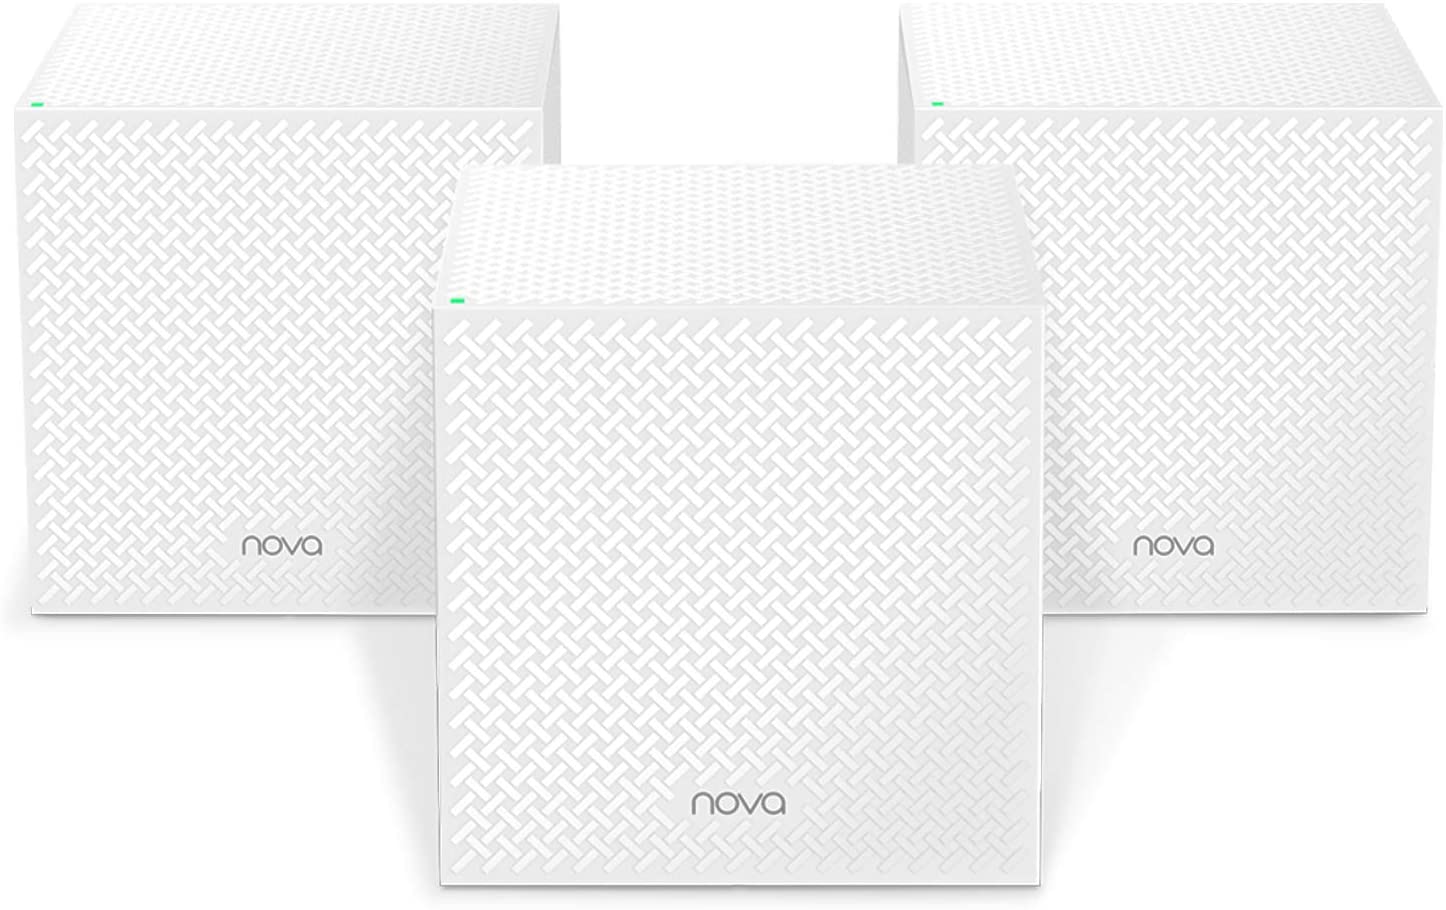 Tenda Nova WLAN Router Gigabit Ethernet Tri-Band (2.4 GHz / 5 GHz / 5 GHz) 3G White